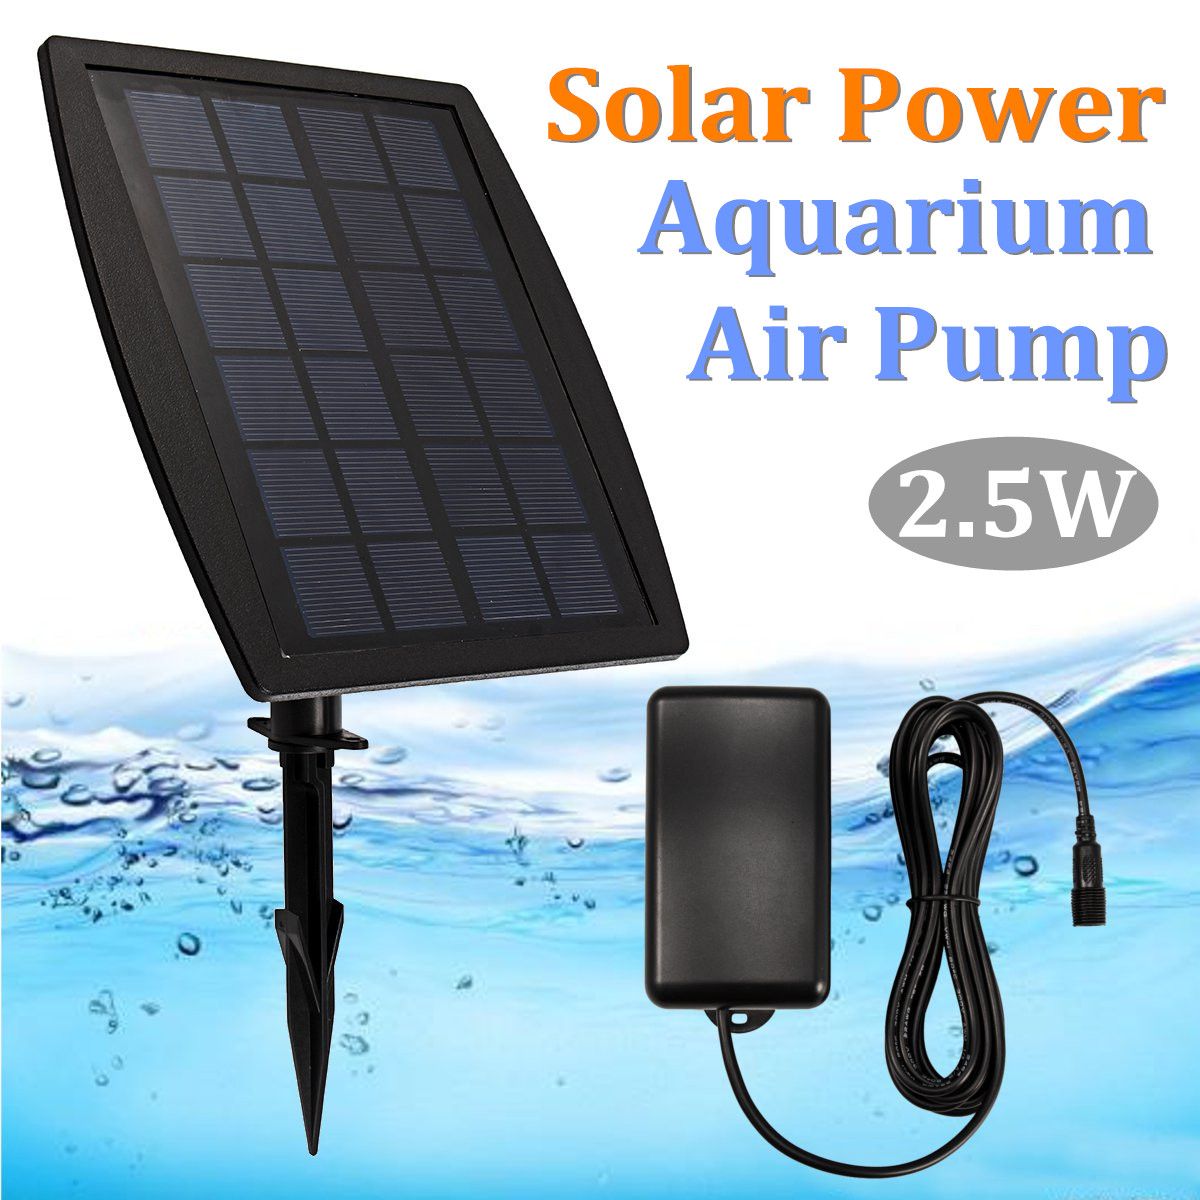 25W-Aquarium-Air-Pump-Solar-Power-Oxygenator-Fish-Tank-Pond-Oxygen-Aerator-1349669